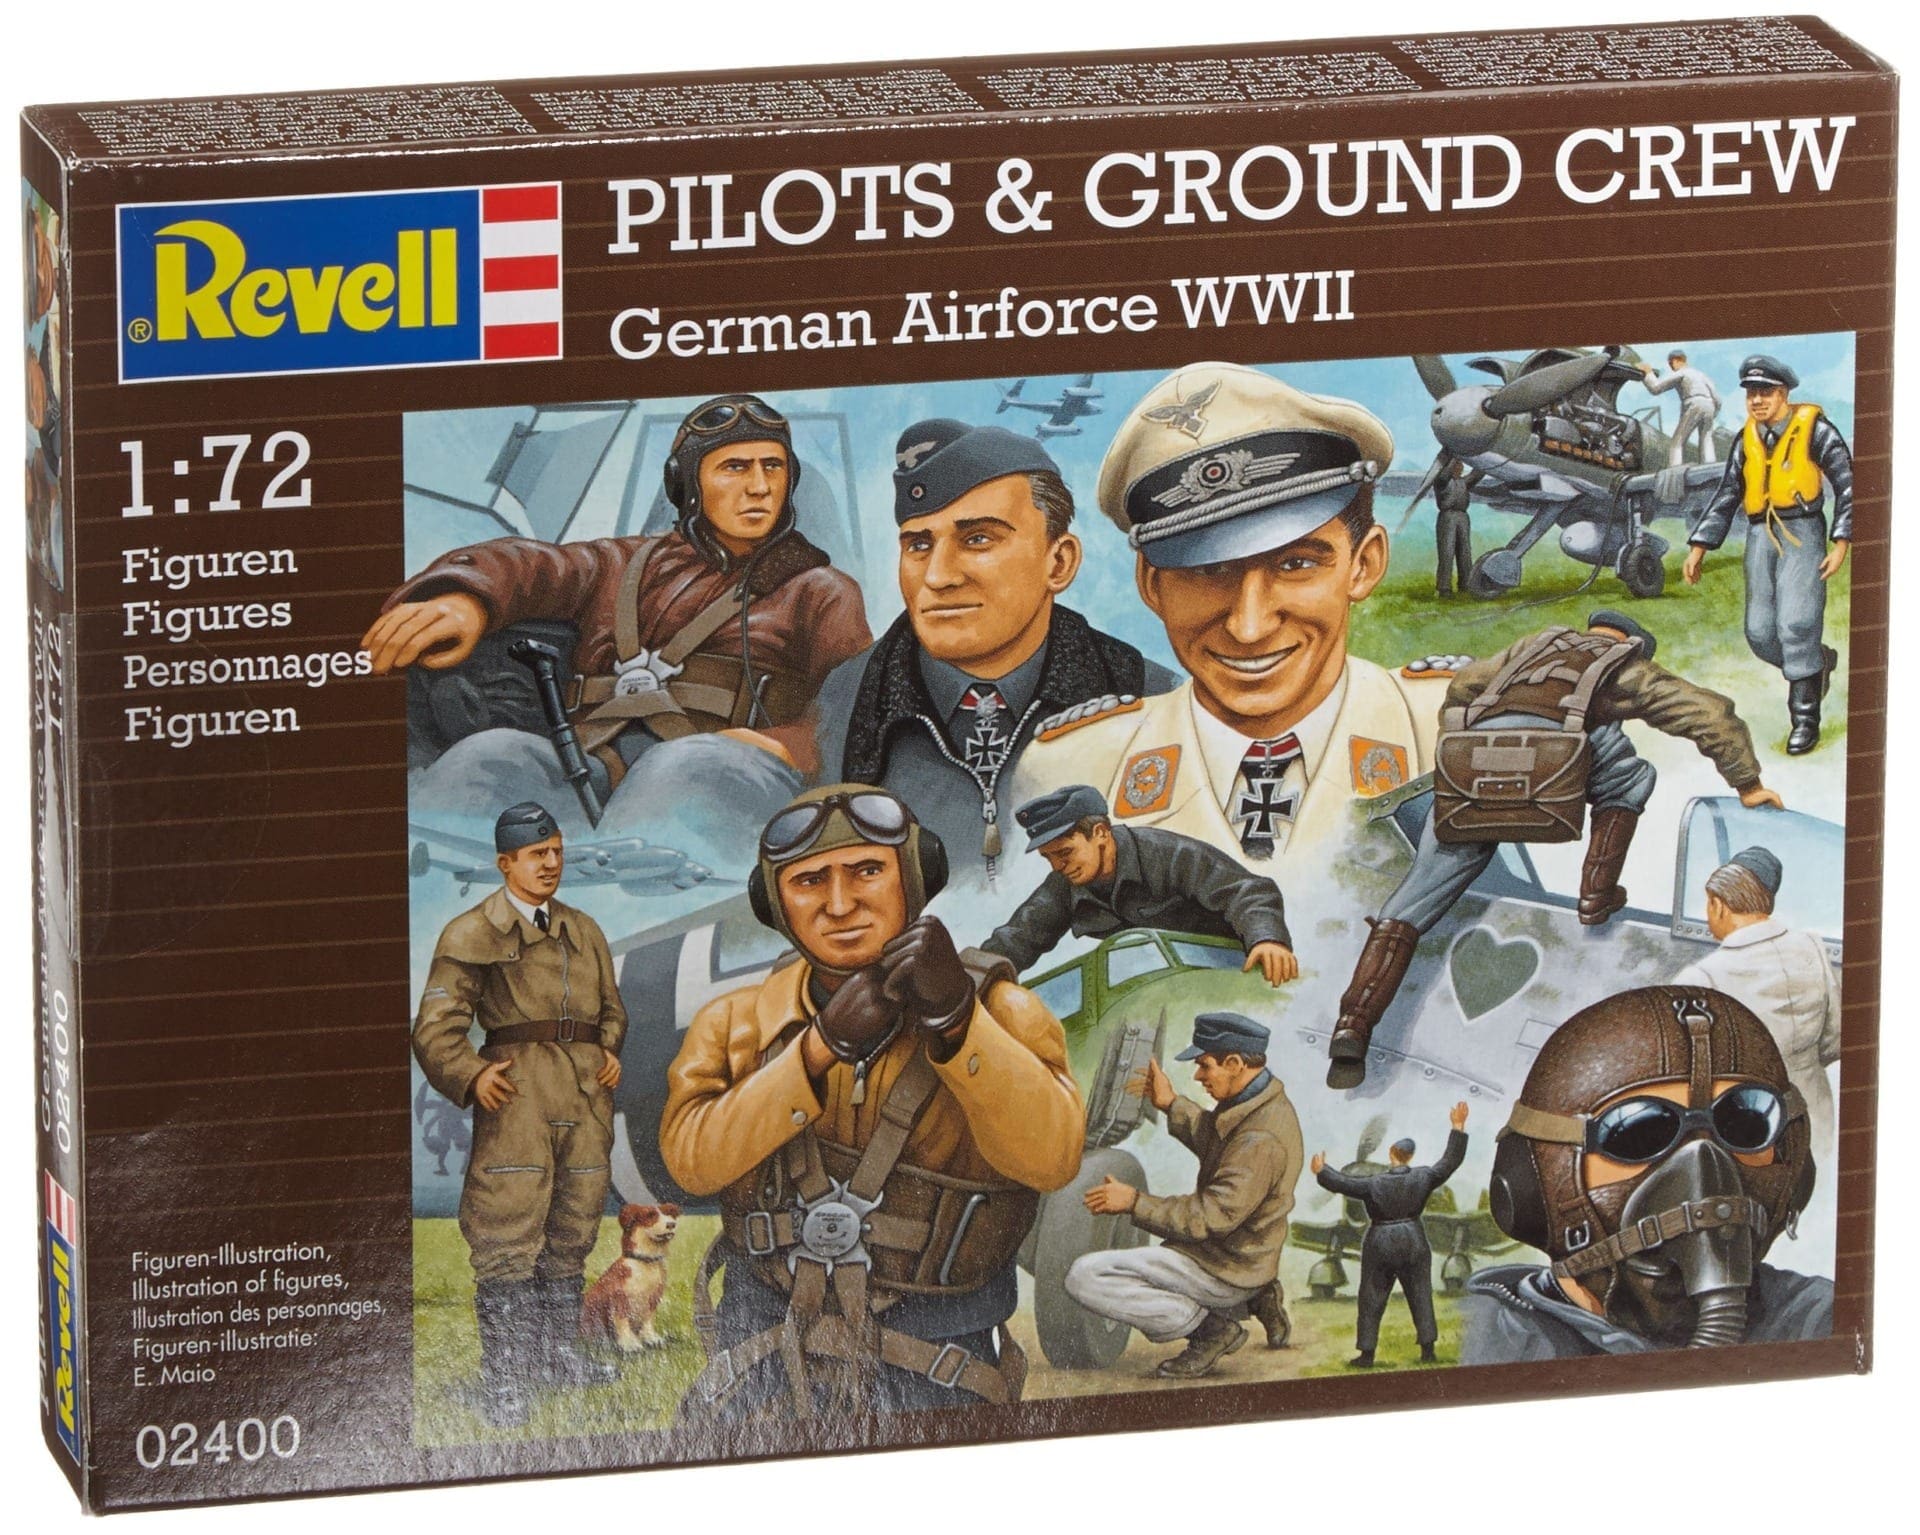 Graeme revell 2. Фигурка летчика 1/72. Revell немецкие солдаты. Revell "пилоты и наземная команда британских ВВС". Фигуры пилотов 1/72.